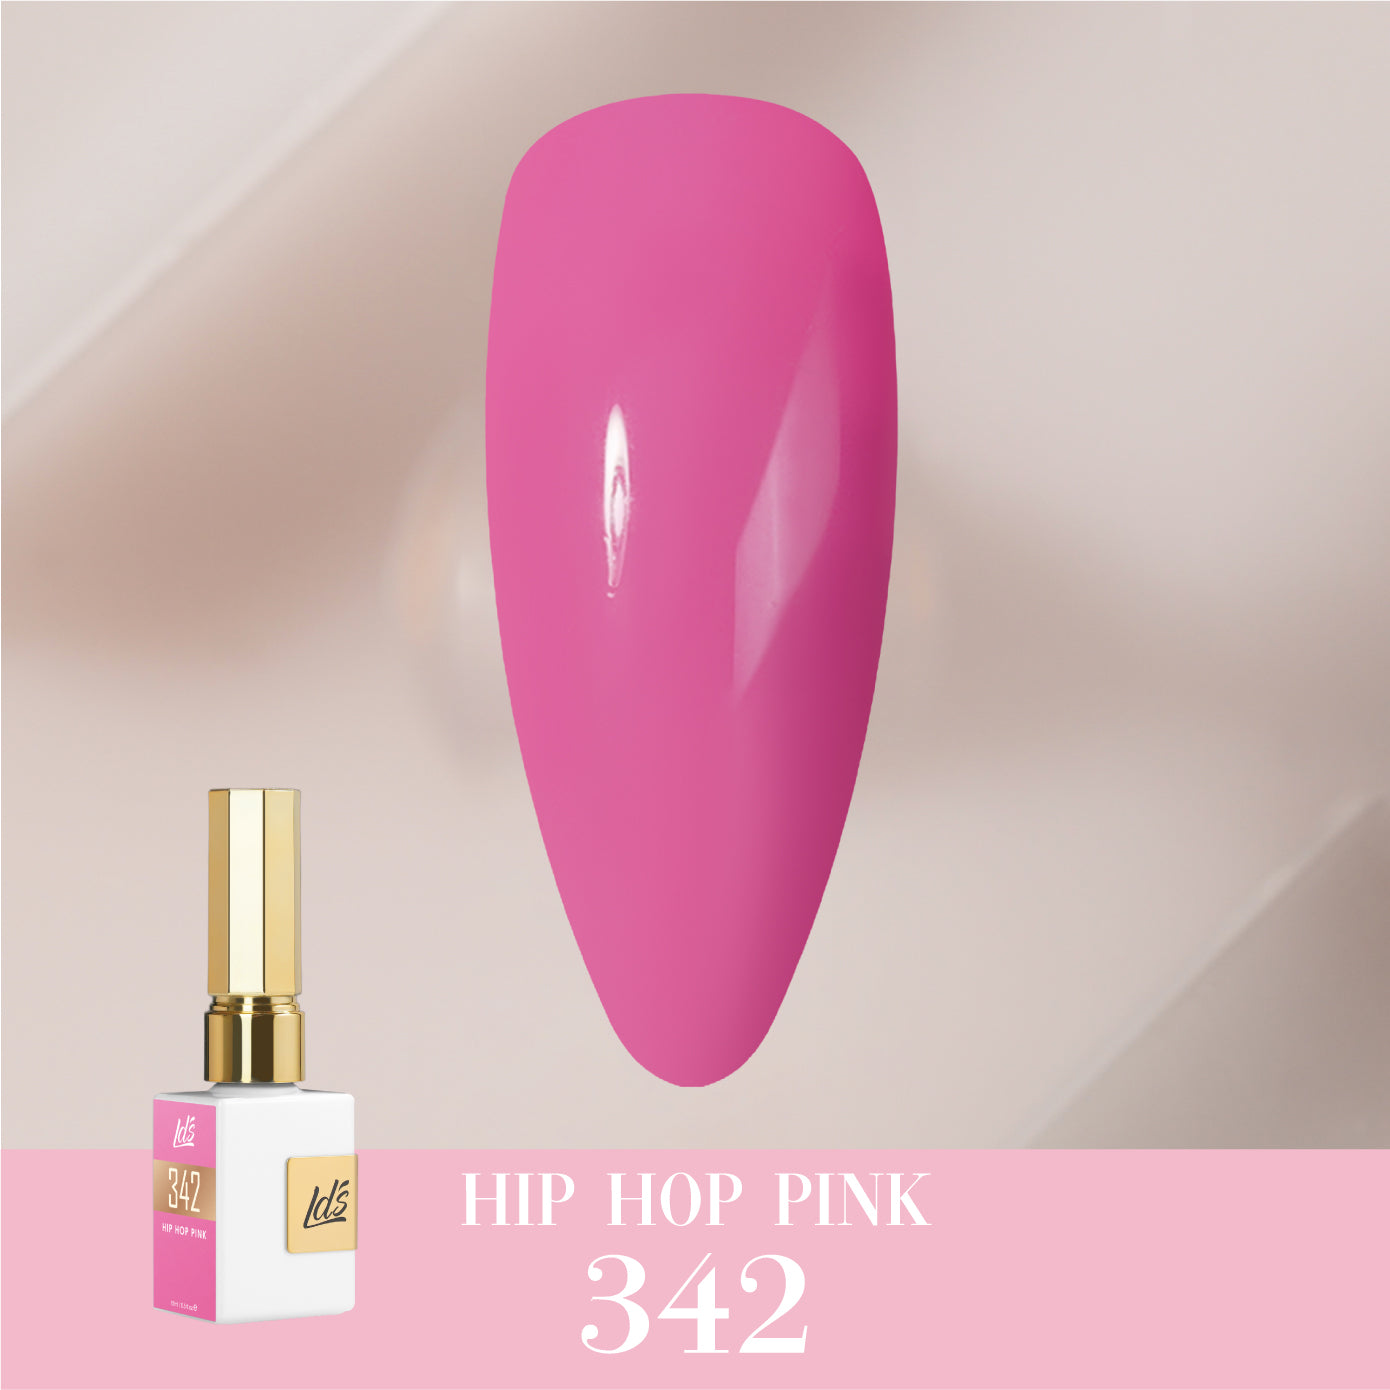 LDS Color Craze Collection - 342 Hip Hop Pink - Gel Polish 0.5oz